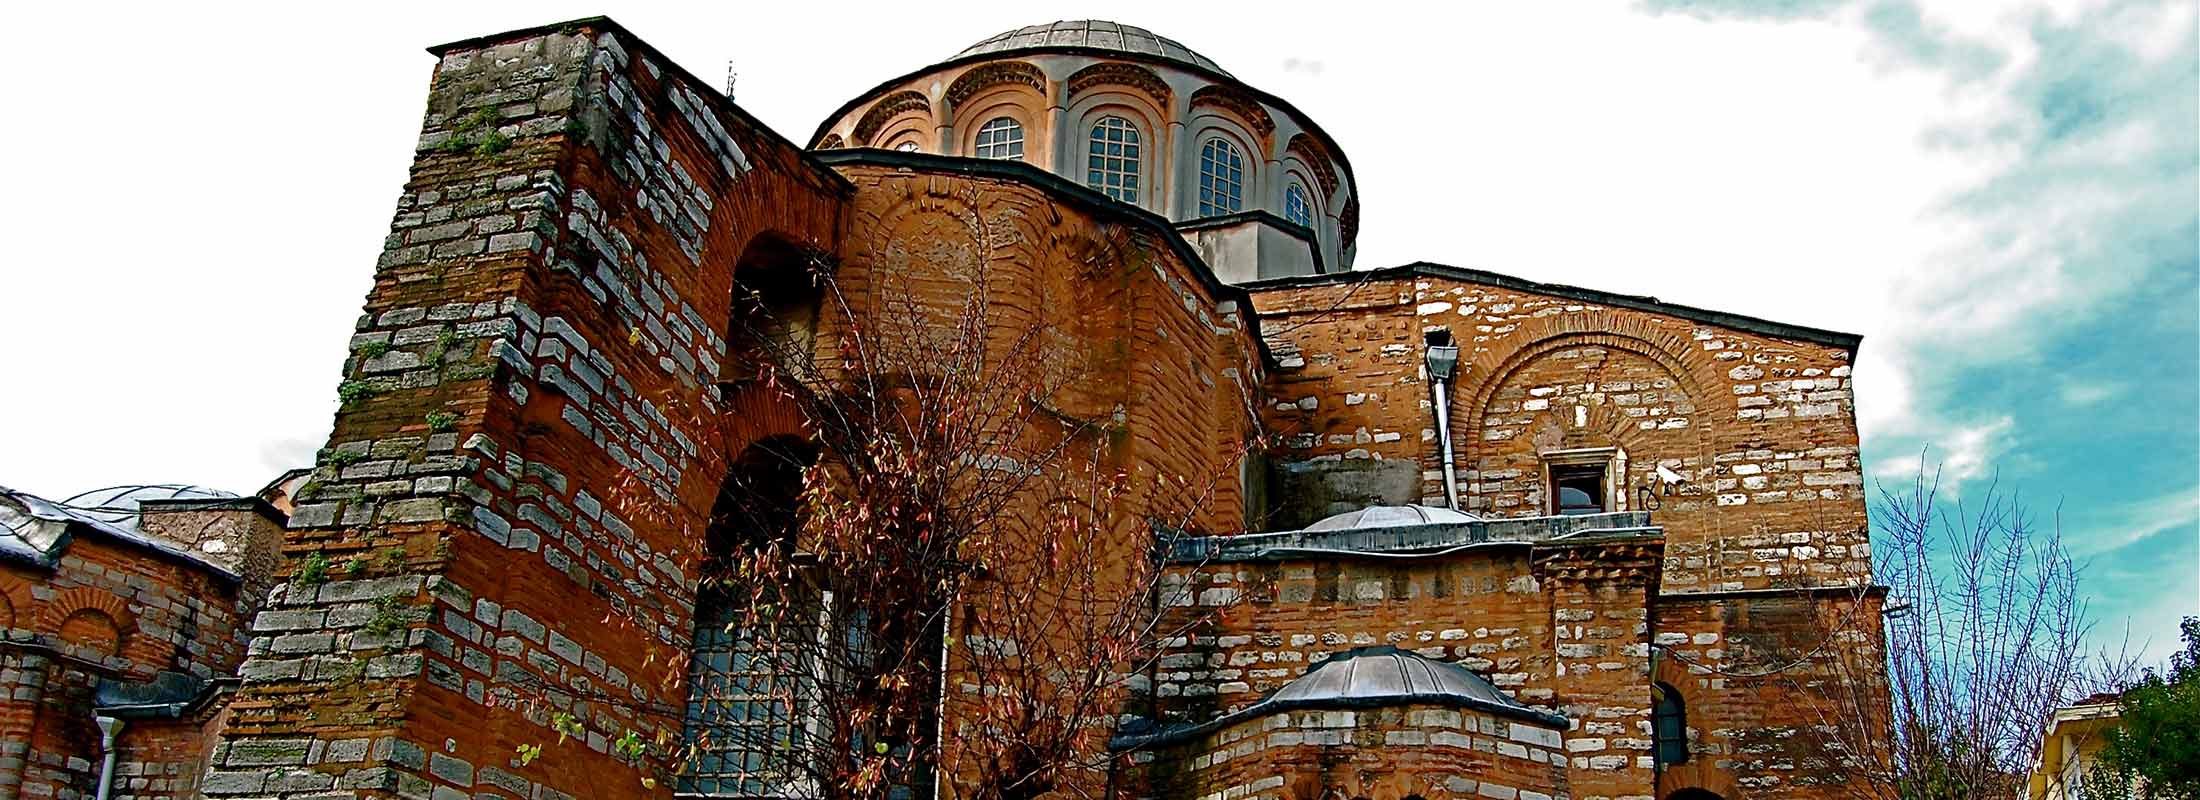 CHORA CHURCH ISTANBUL CITY TOURS